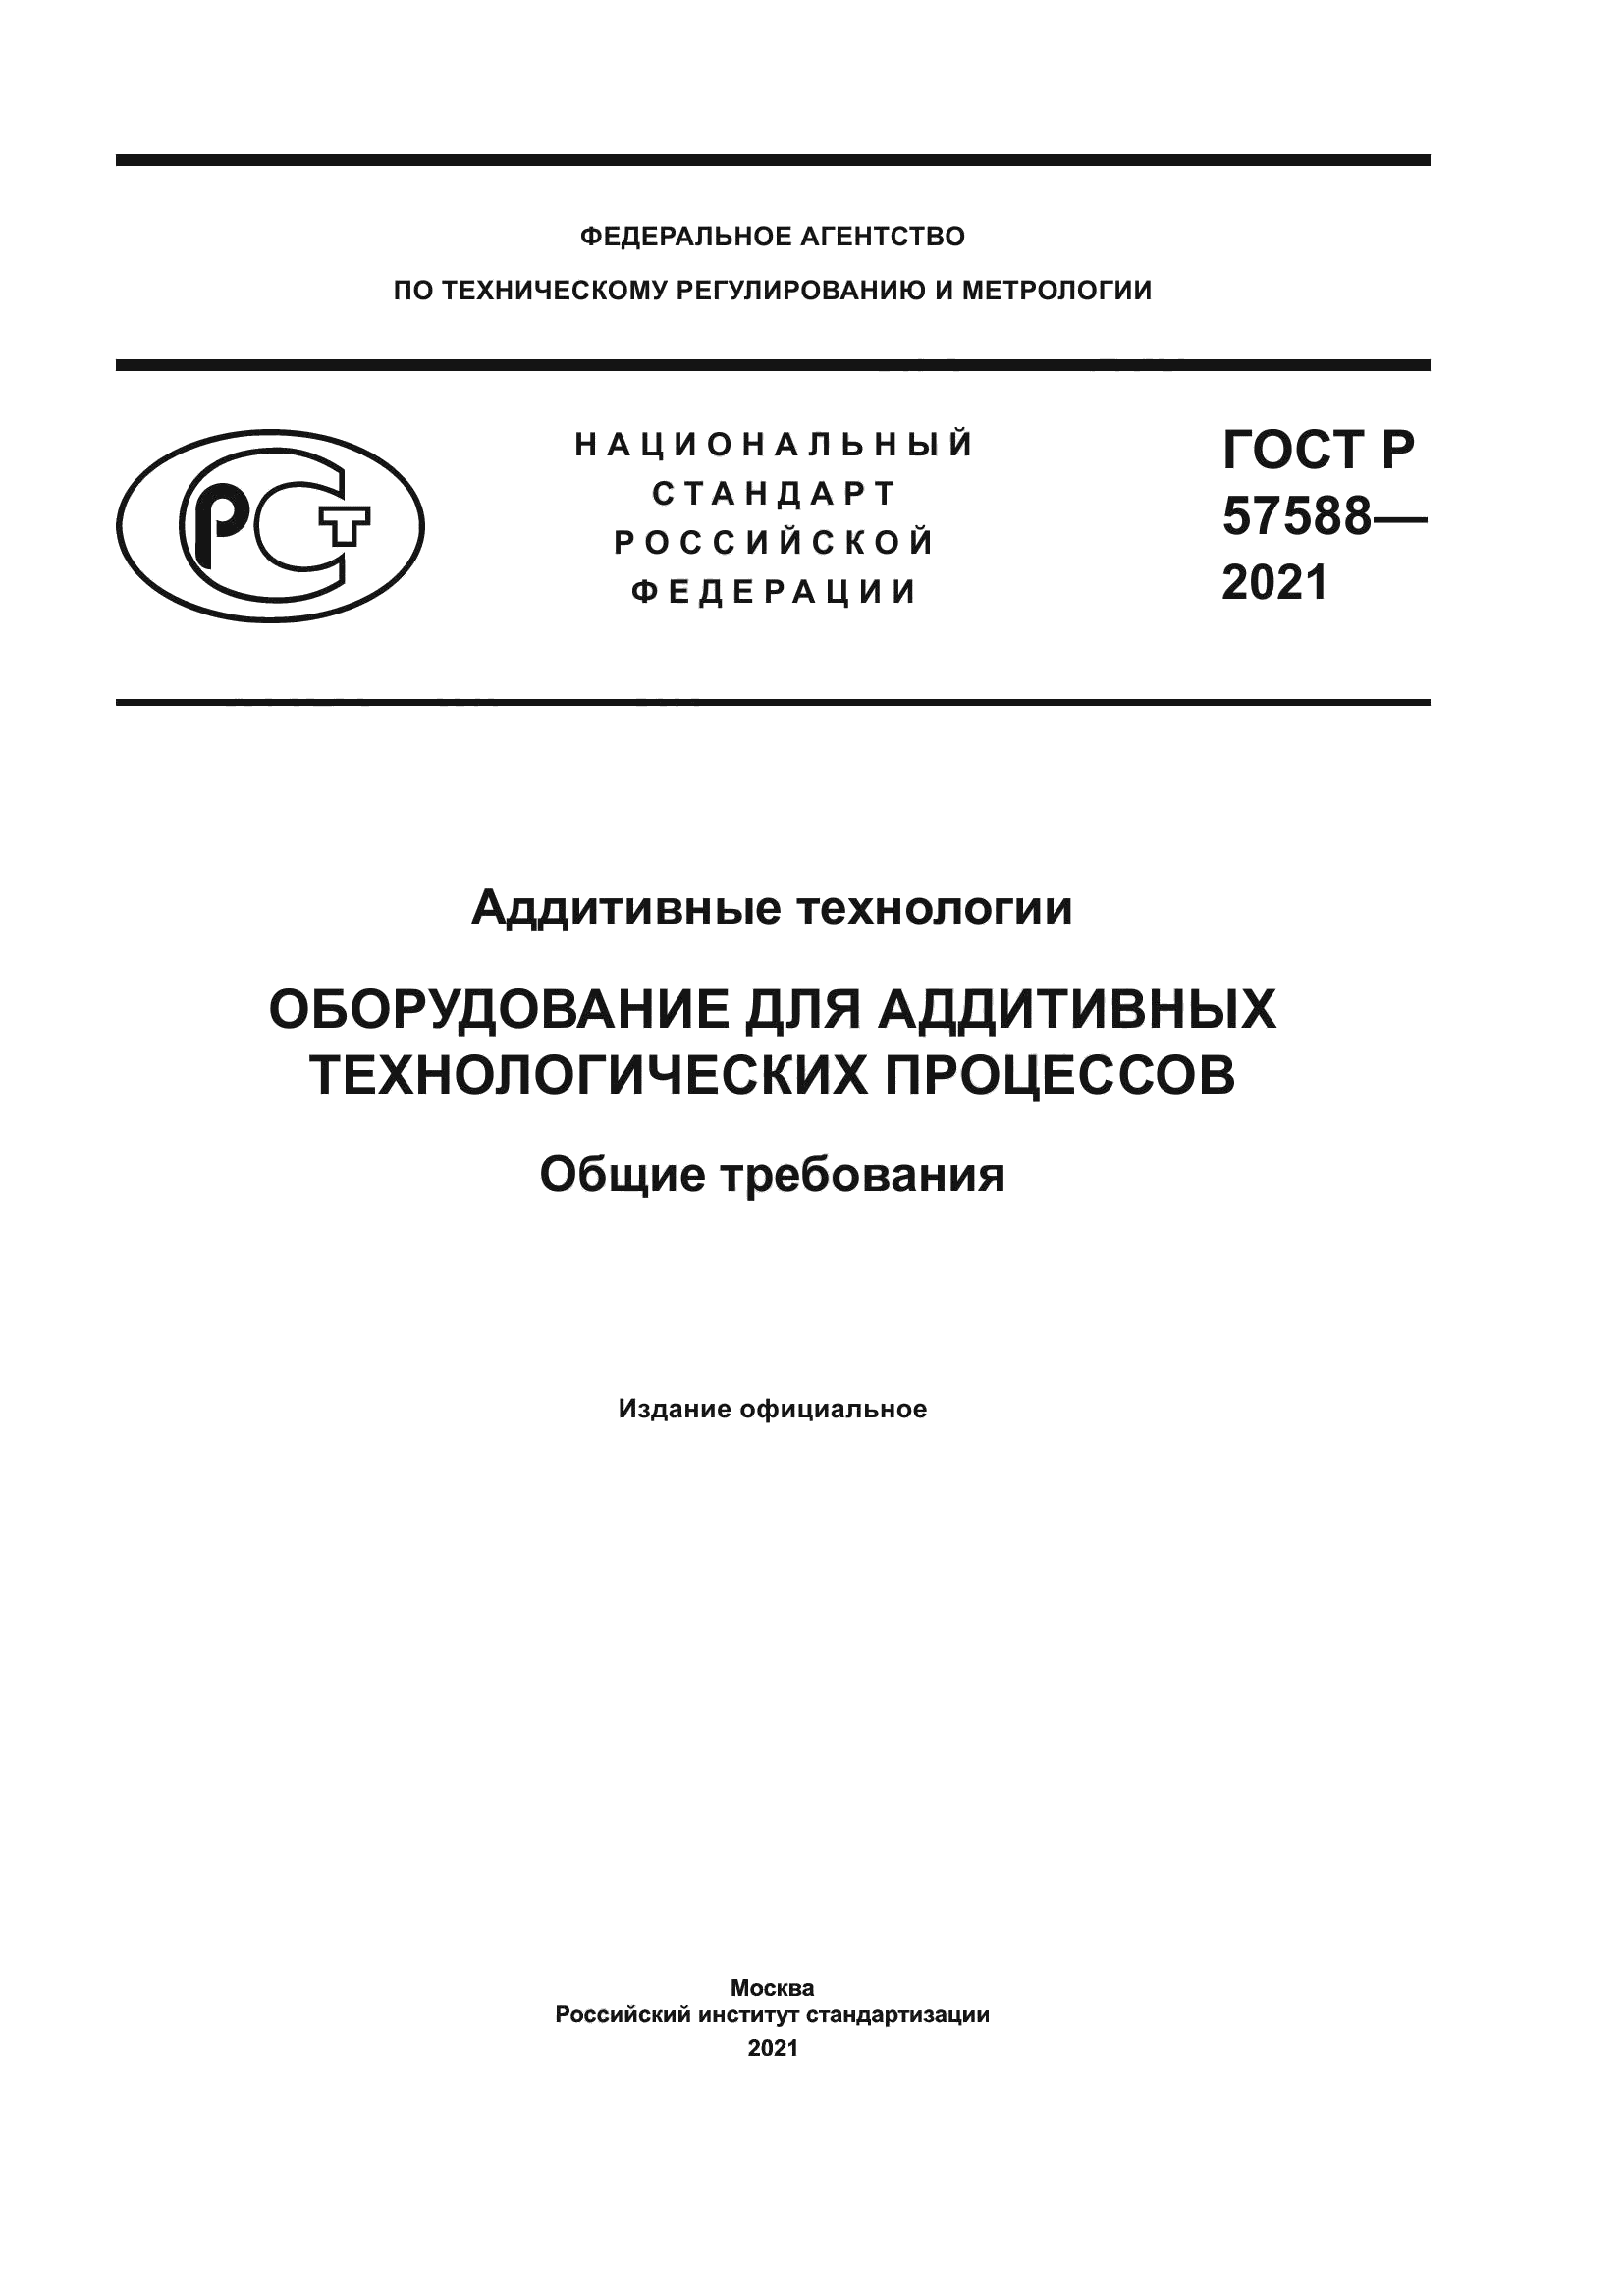 ГОСТ Р 57588-2021